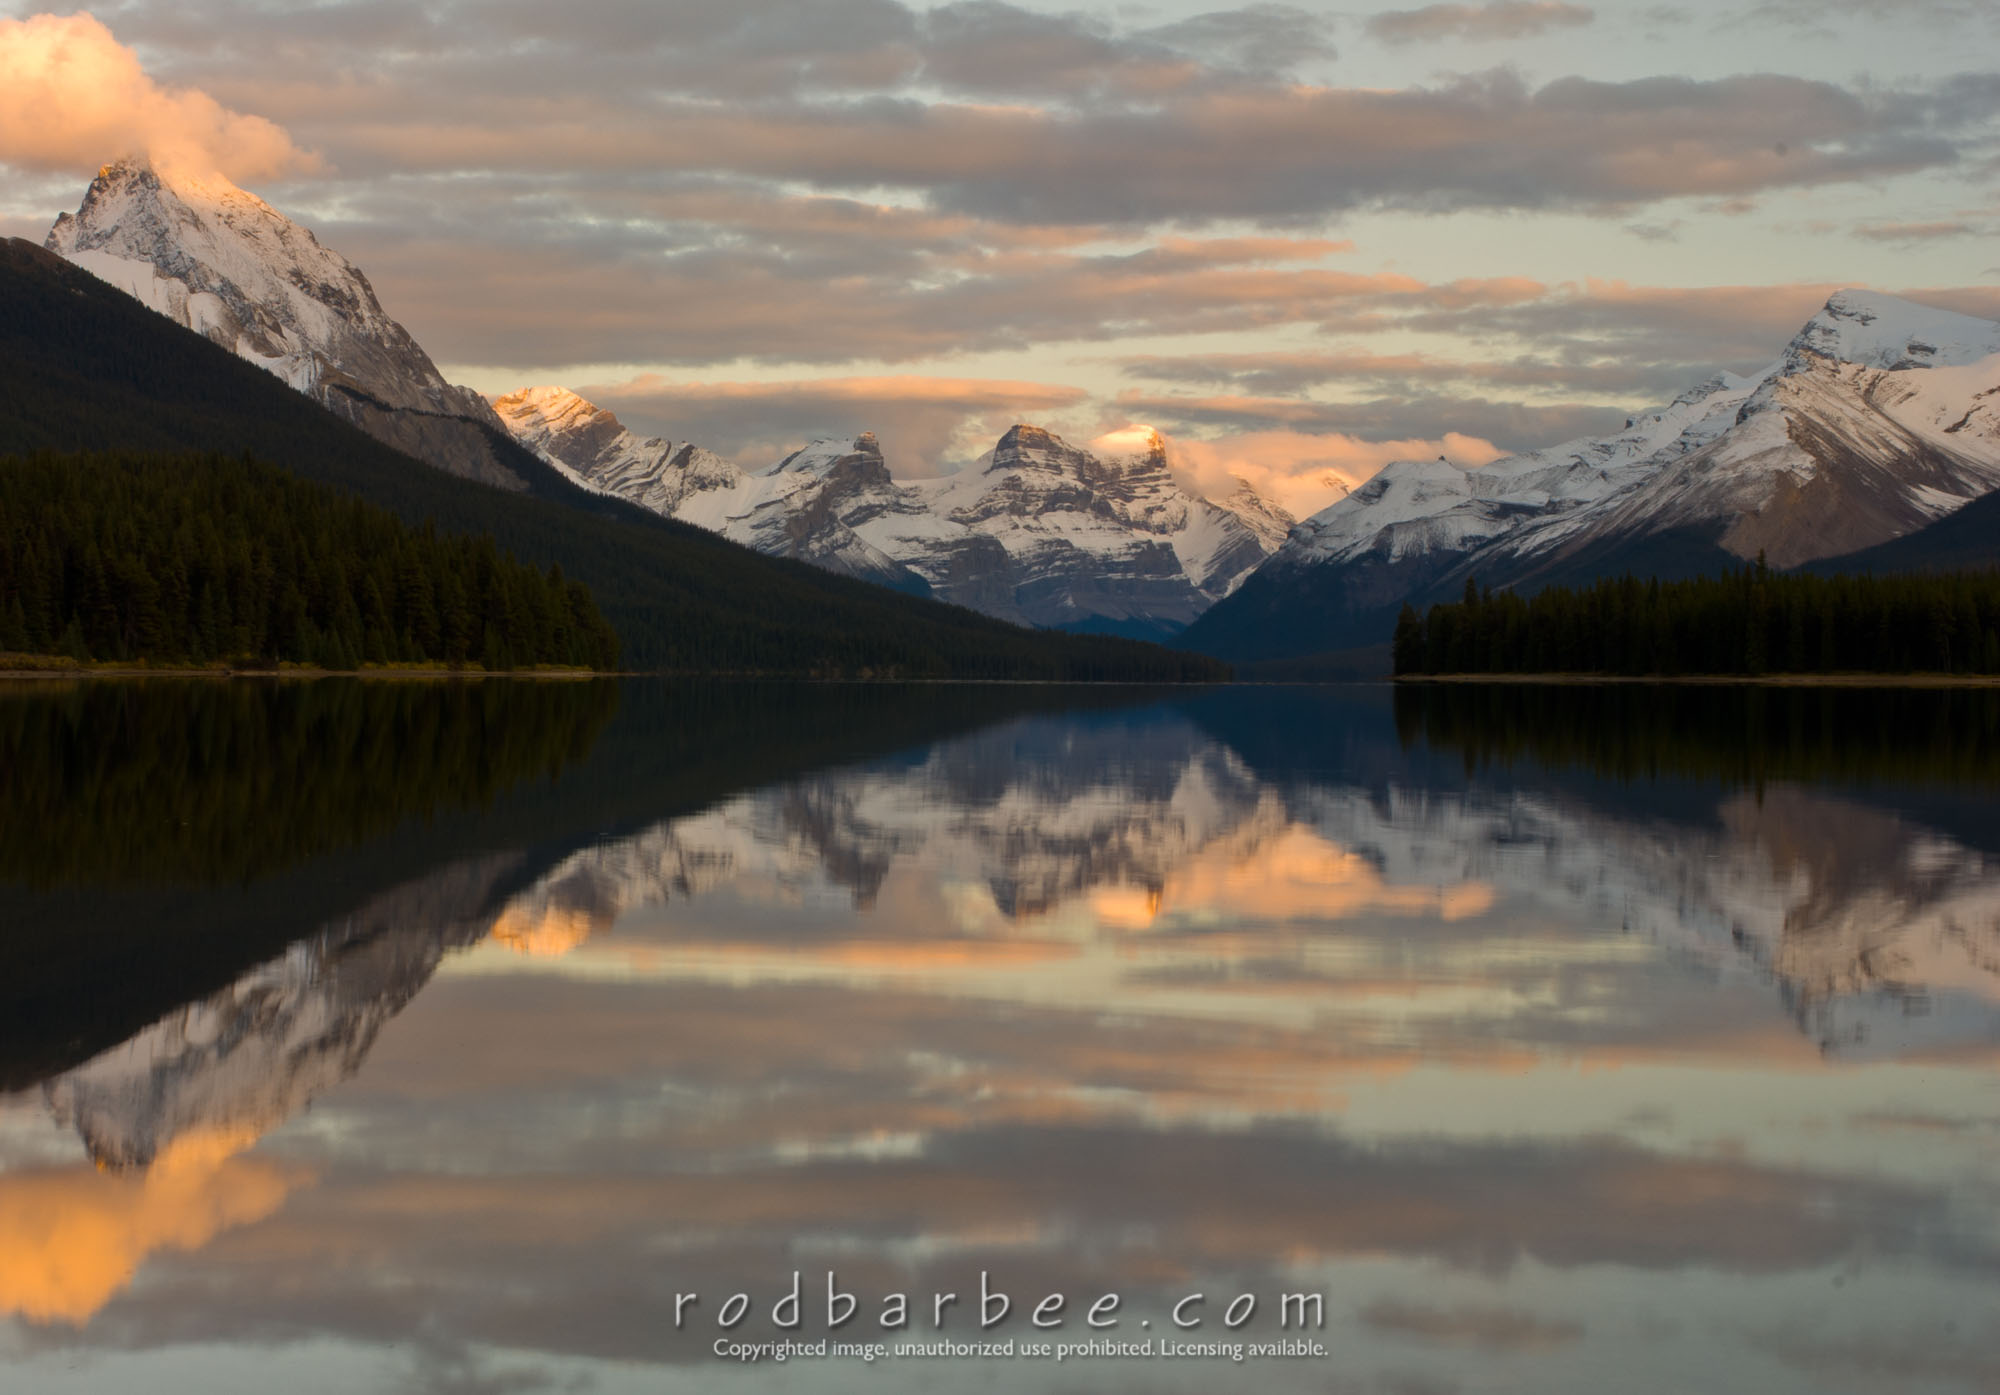 Barbee_070923_2_1066 |  Maligne Lake, Jasper National Park, Alberta